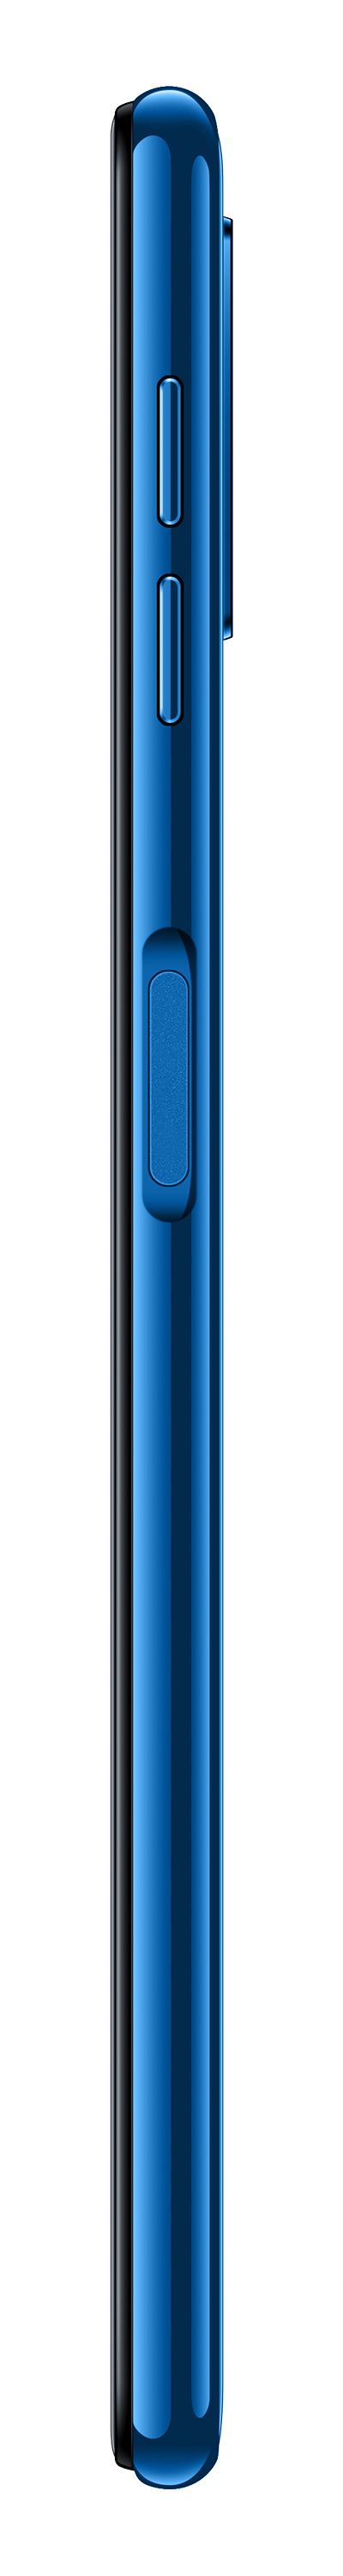 Samsung SM-A750F